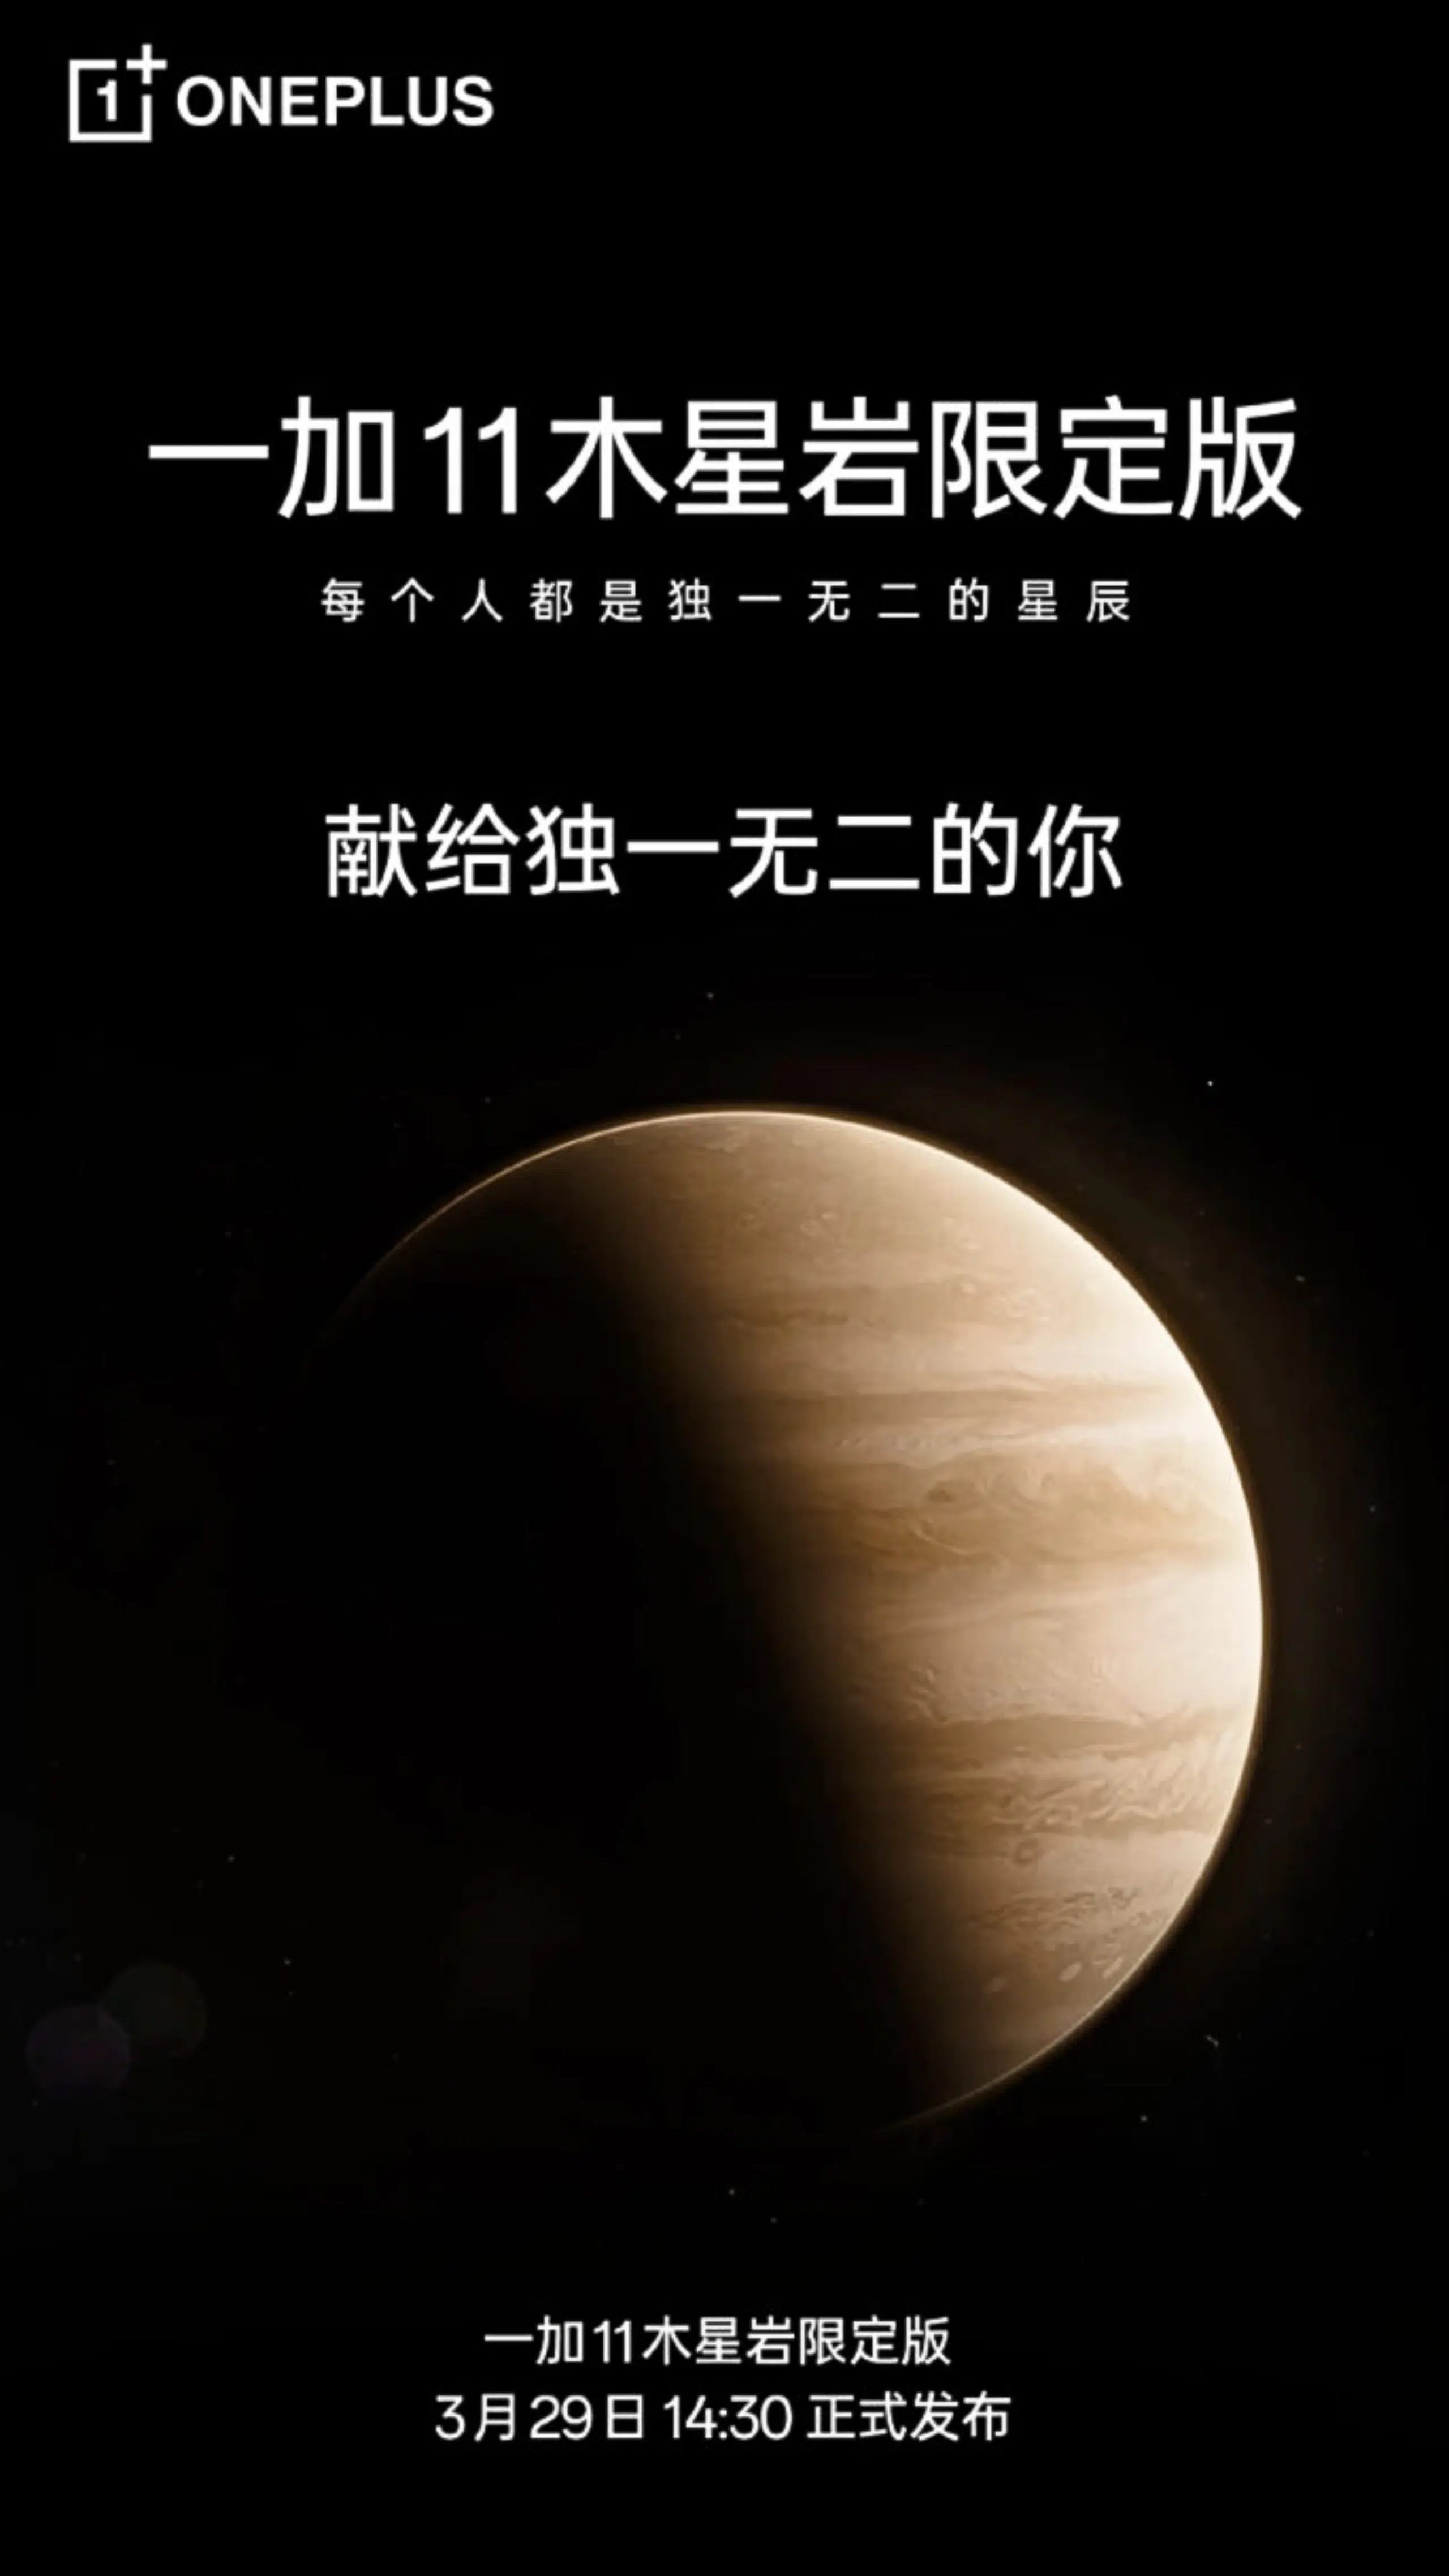 OnePlus 11 5G Jupiter Rock edition teaser